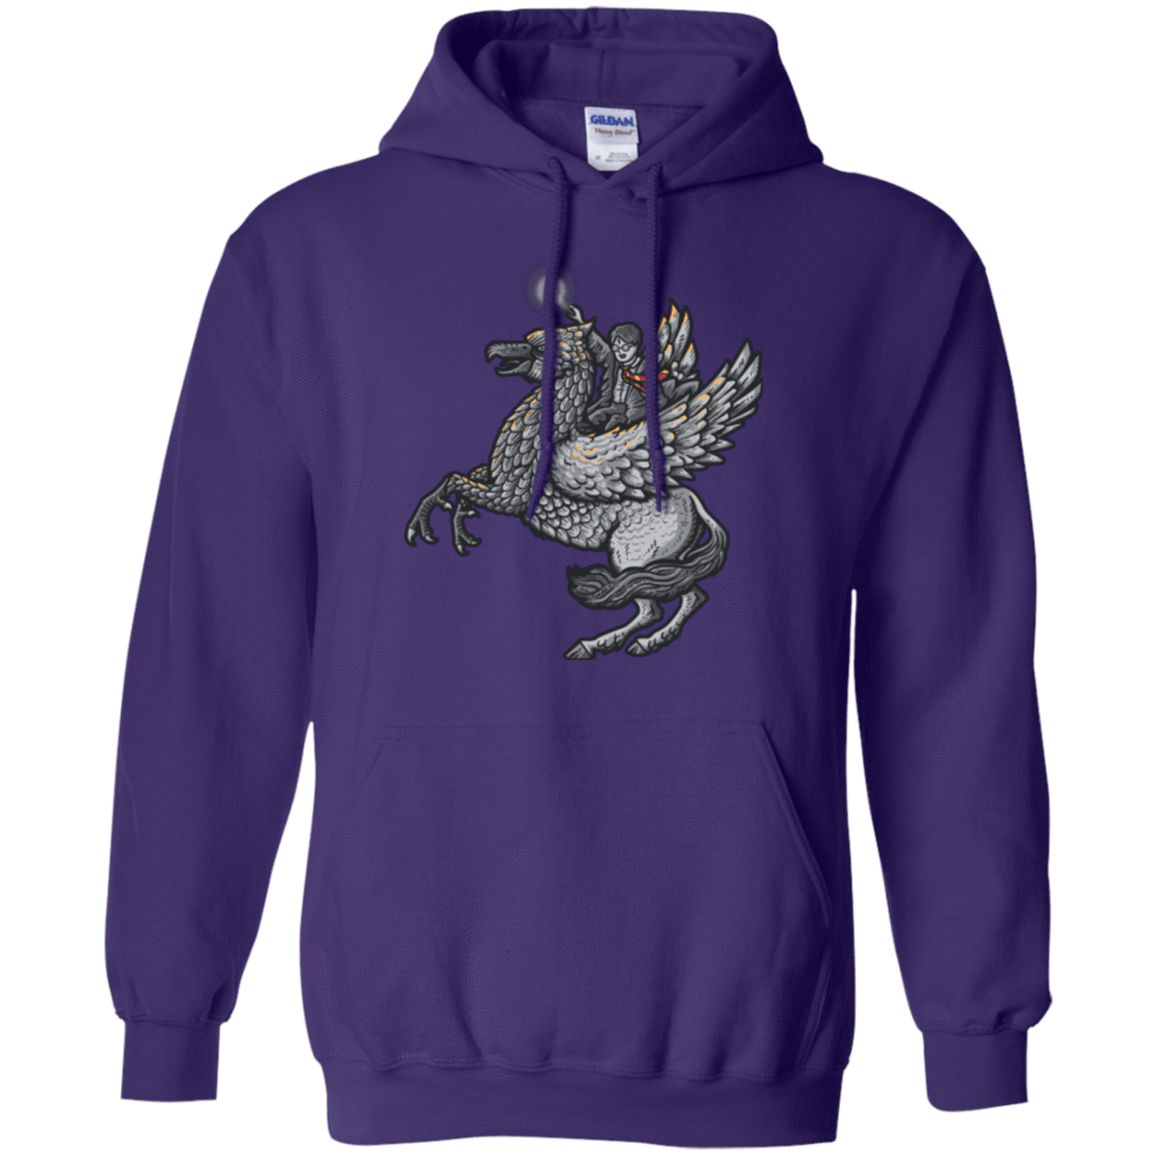 Sweatshirts Purple / Small MAGIC FLY Pullover Hoodie